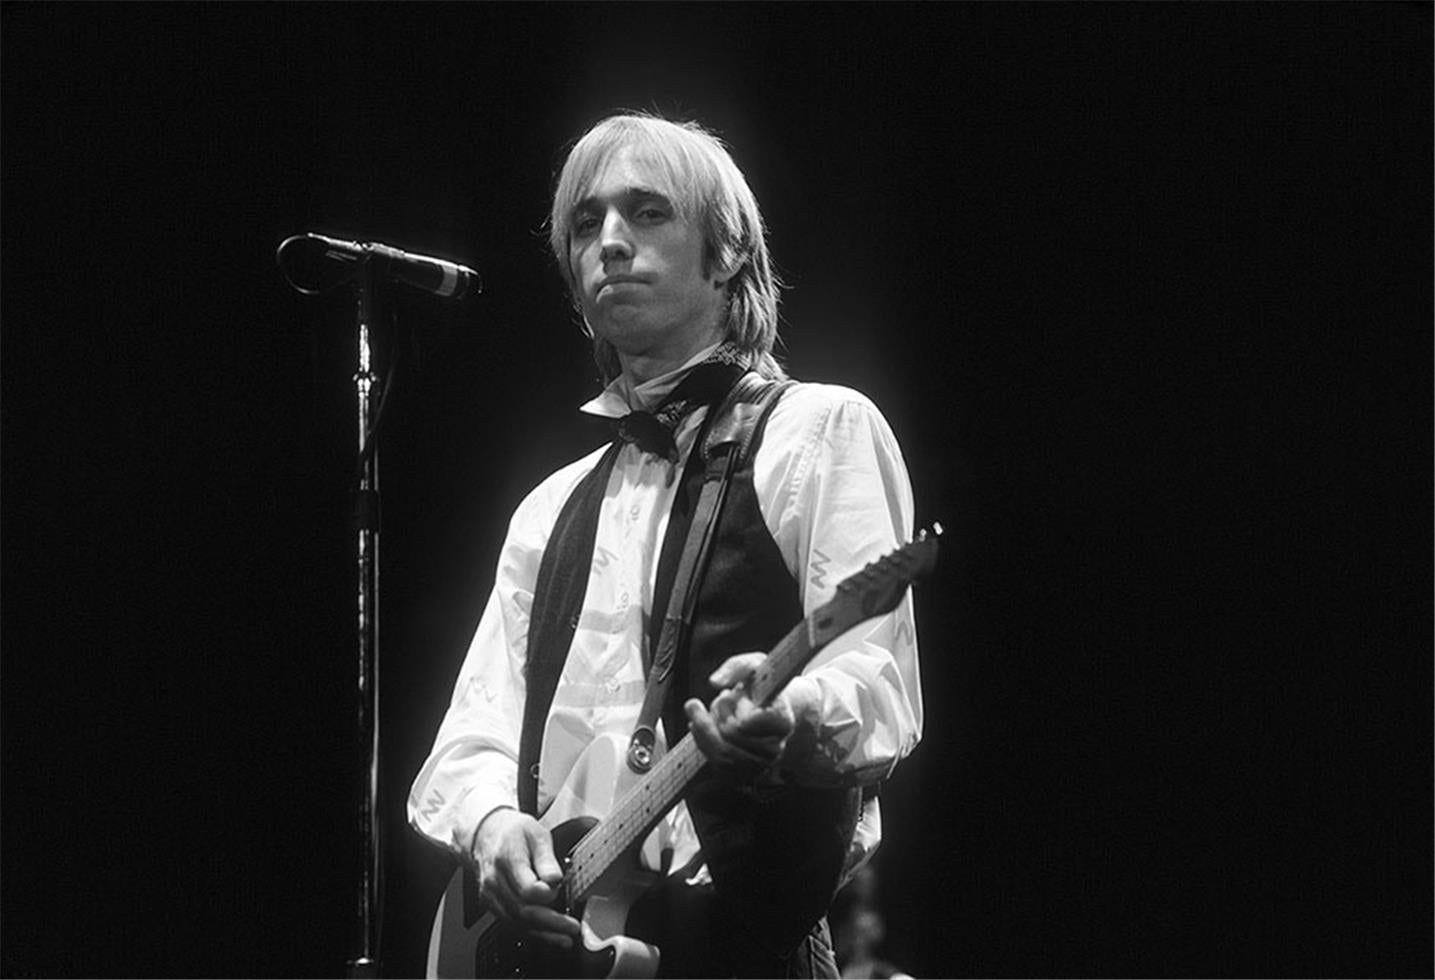  Charlyn Zlotnik Black and White Photograph - Tom Petty, NJ, 1983